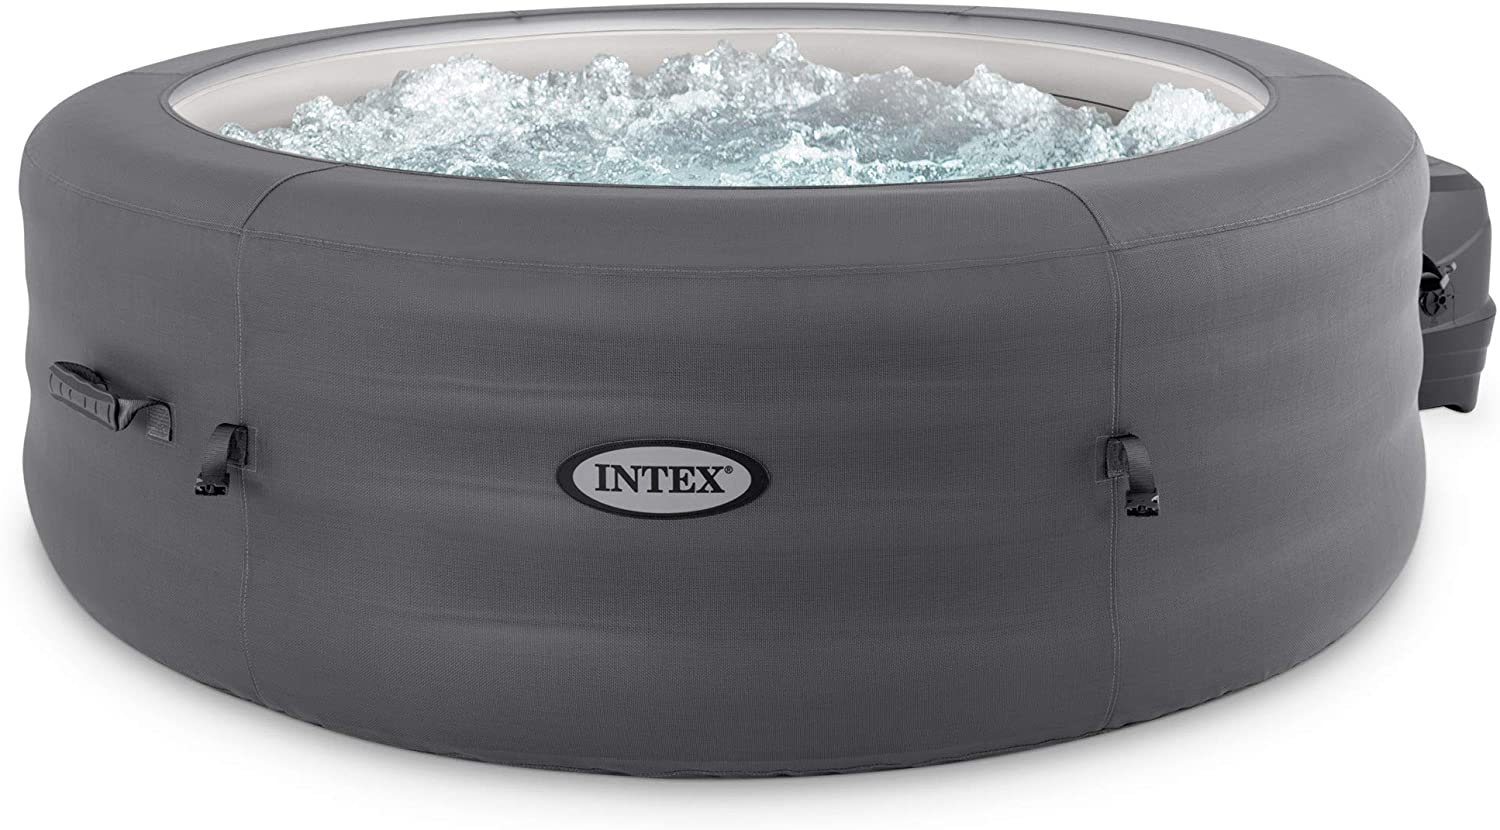 6. Intex Round Heated Hot Tub